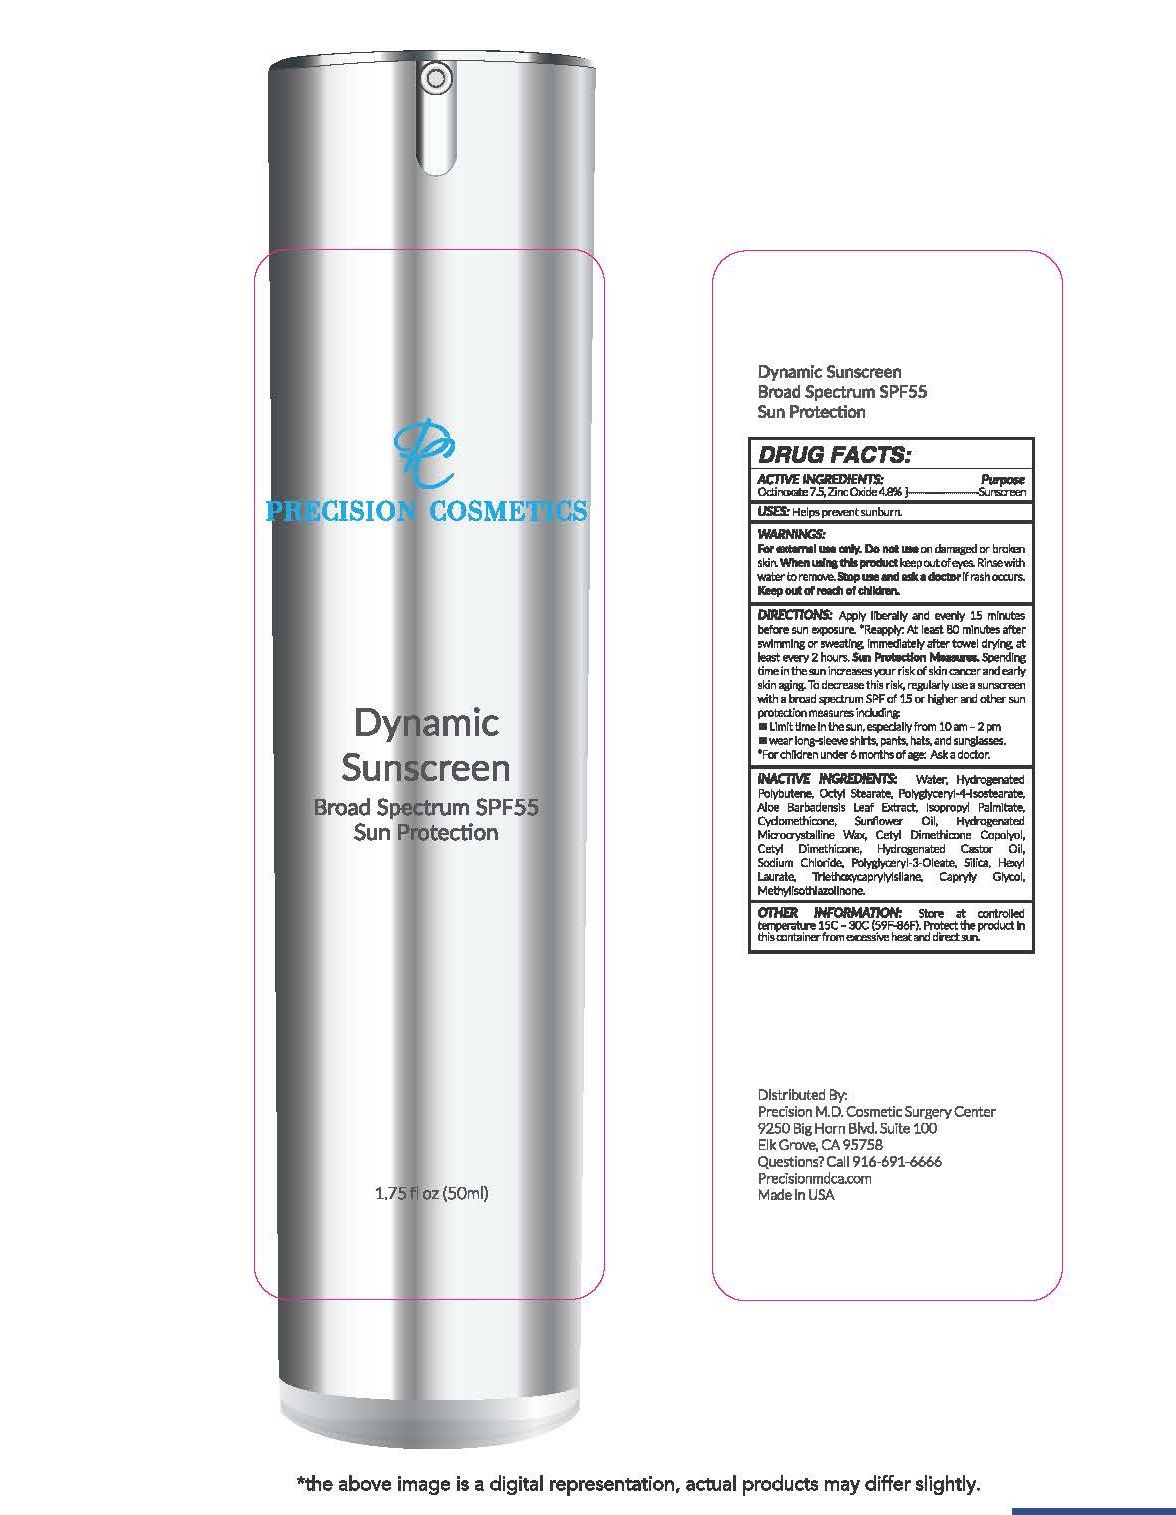 Precision Cosmetics Dynamic Sunscreen Broad Spectrum SPF 55 Sun Protection 1.75 fl oz (50ml)